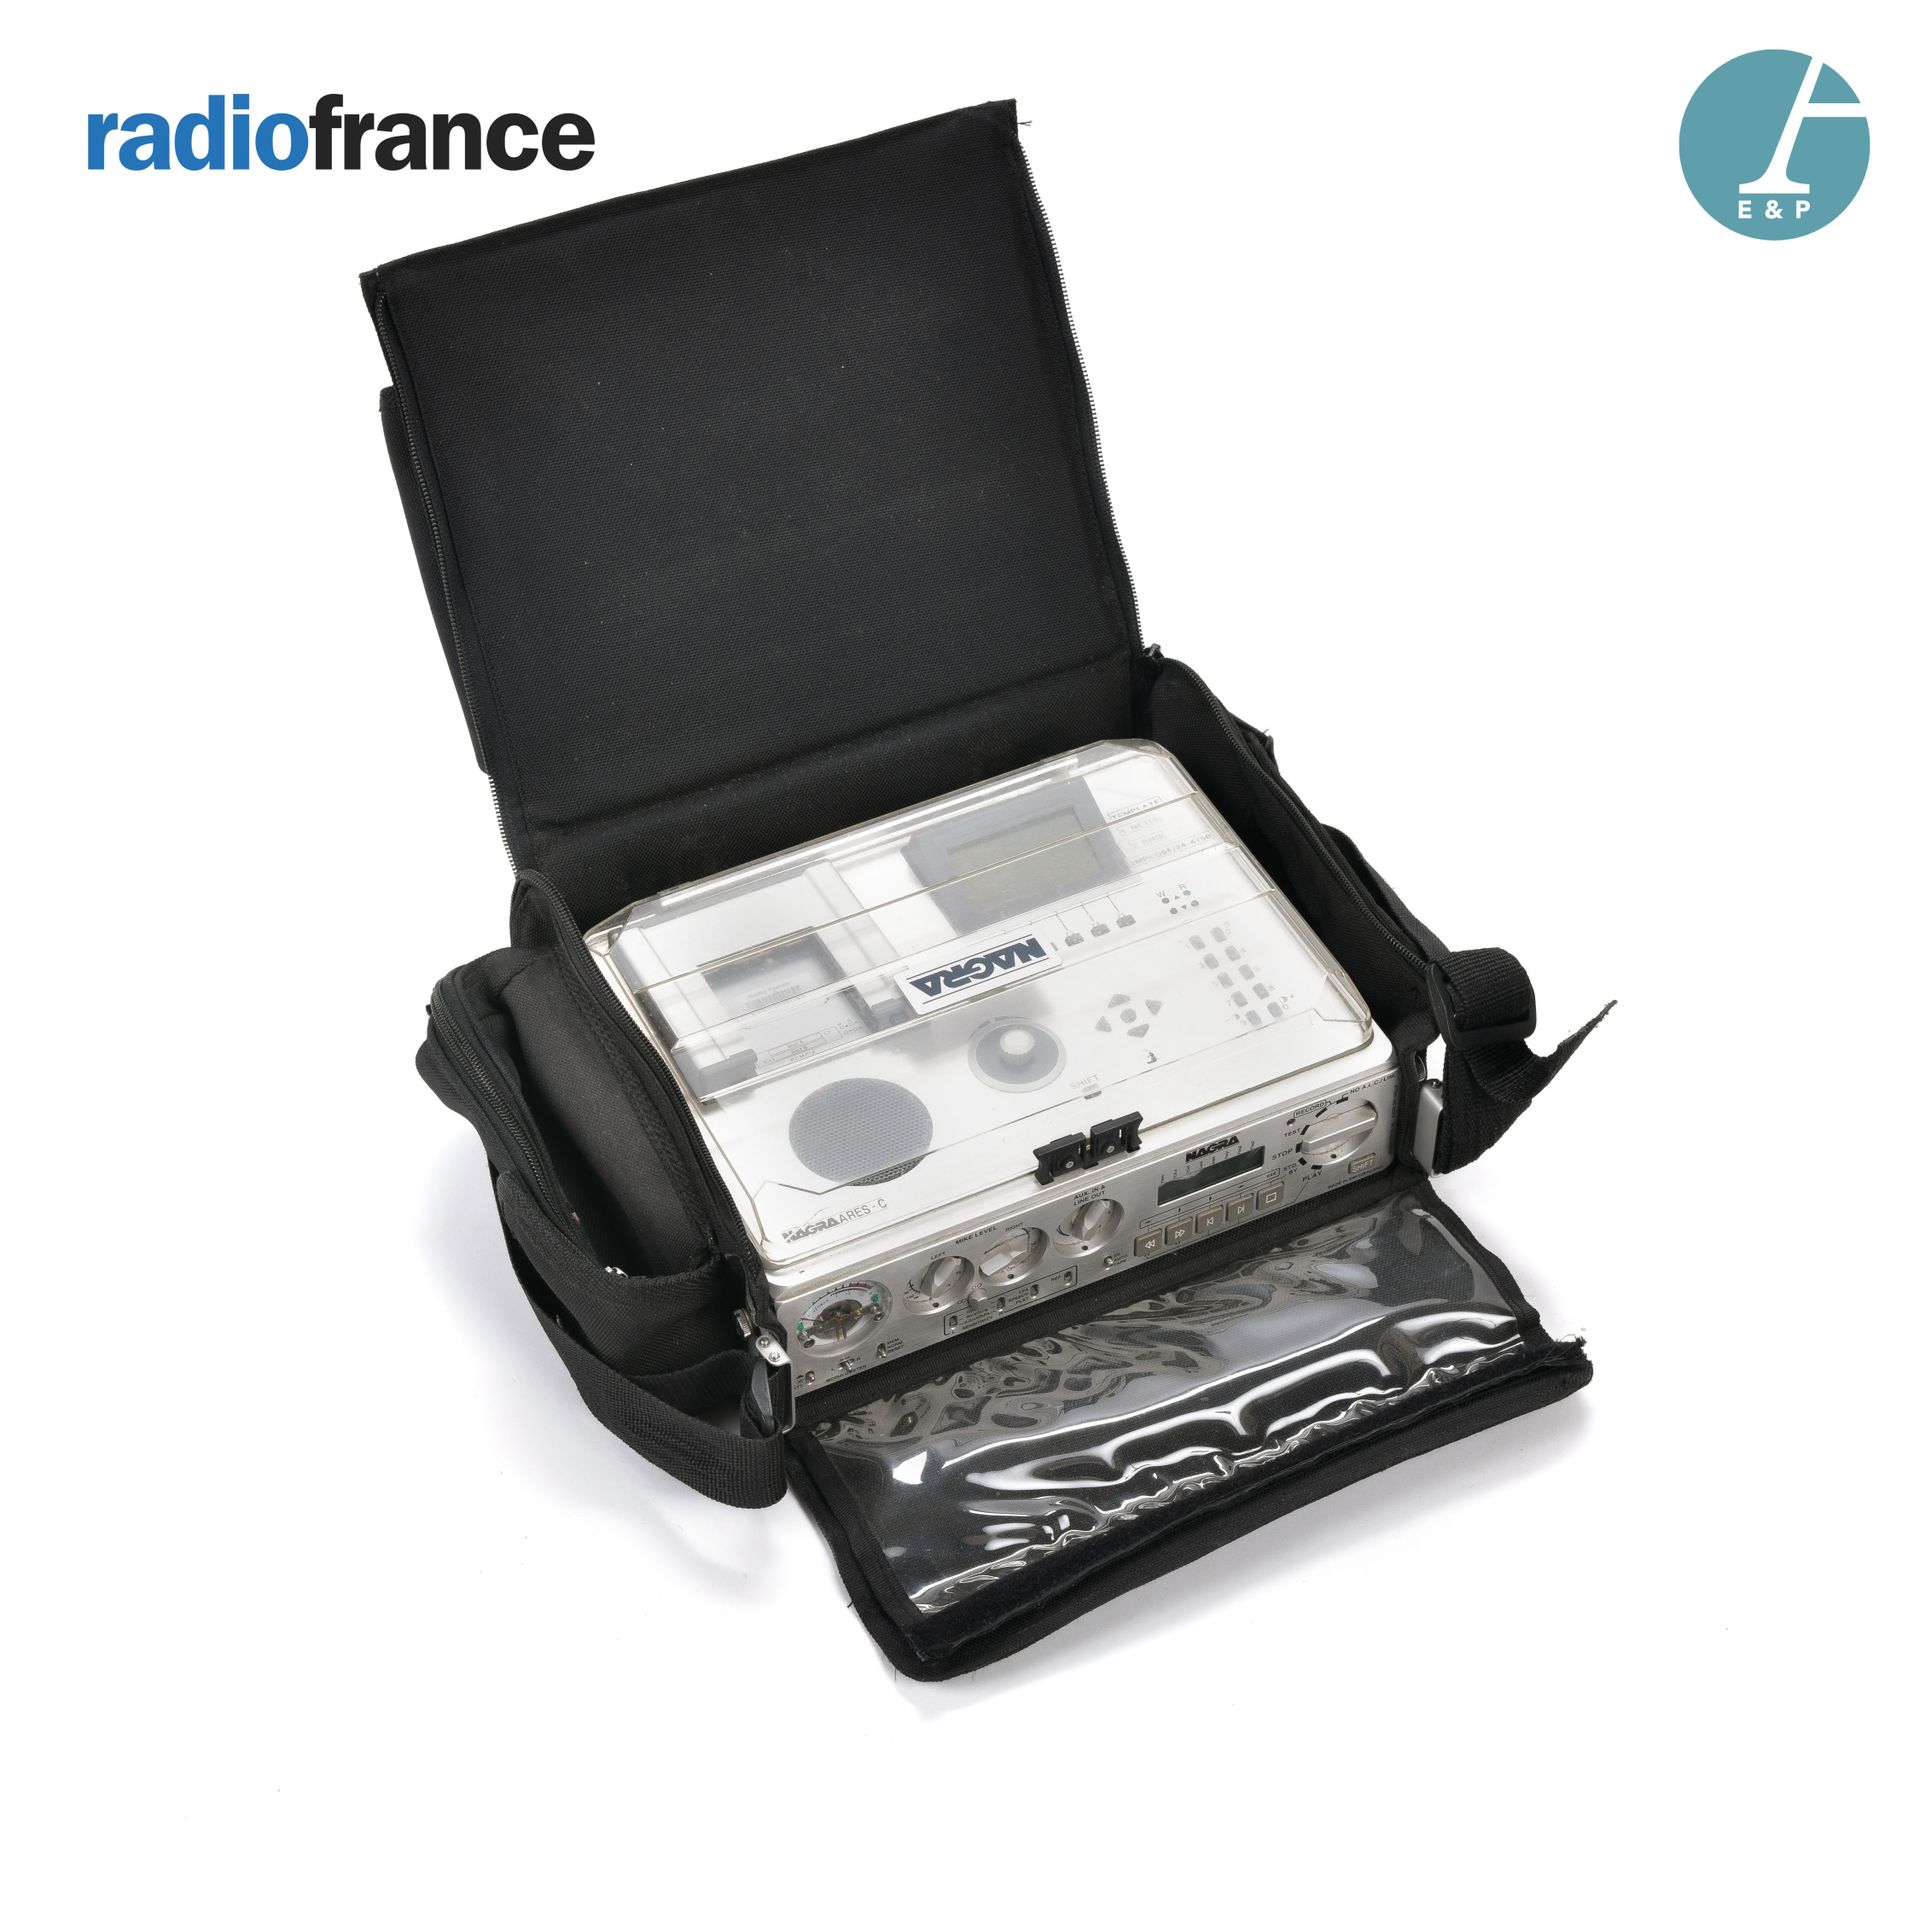 Null NAGRA数字录音机，Ares-C，带有法国广播电台标志的原始黑布袋。

高：9.5厘米 - 宽：29厘米 - 深：22厘米

来自法国Bleu Ga&hellip;